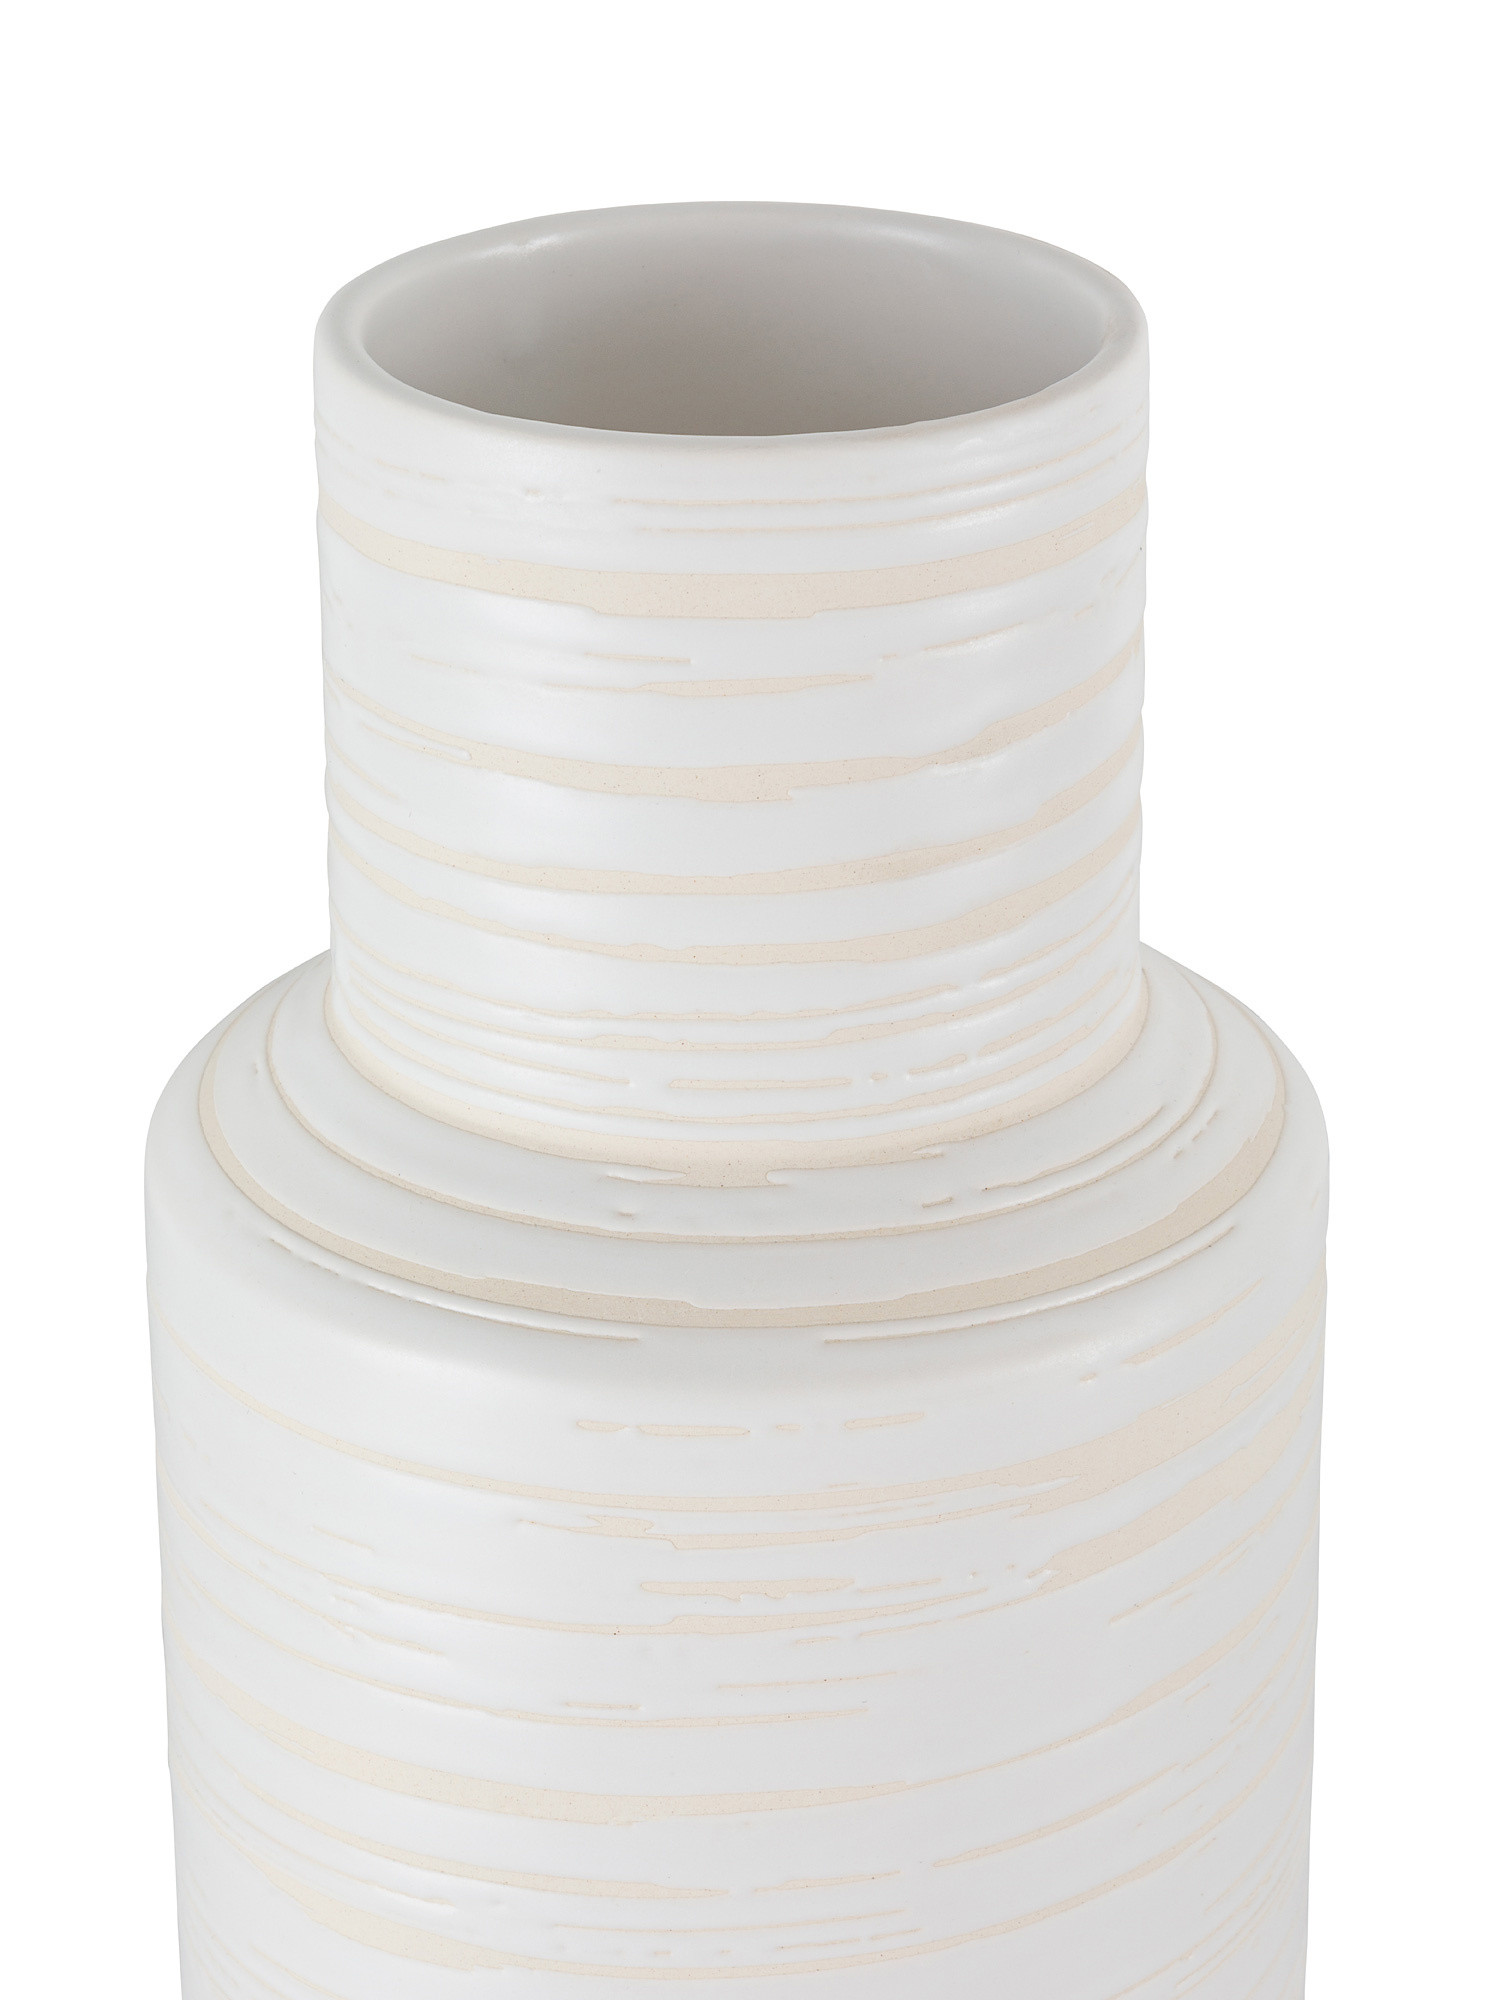 Portuguese ceramic vase, White, large image number 1